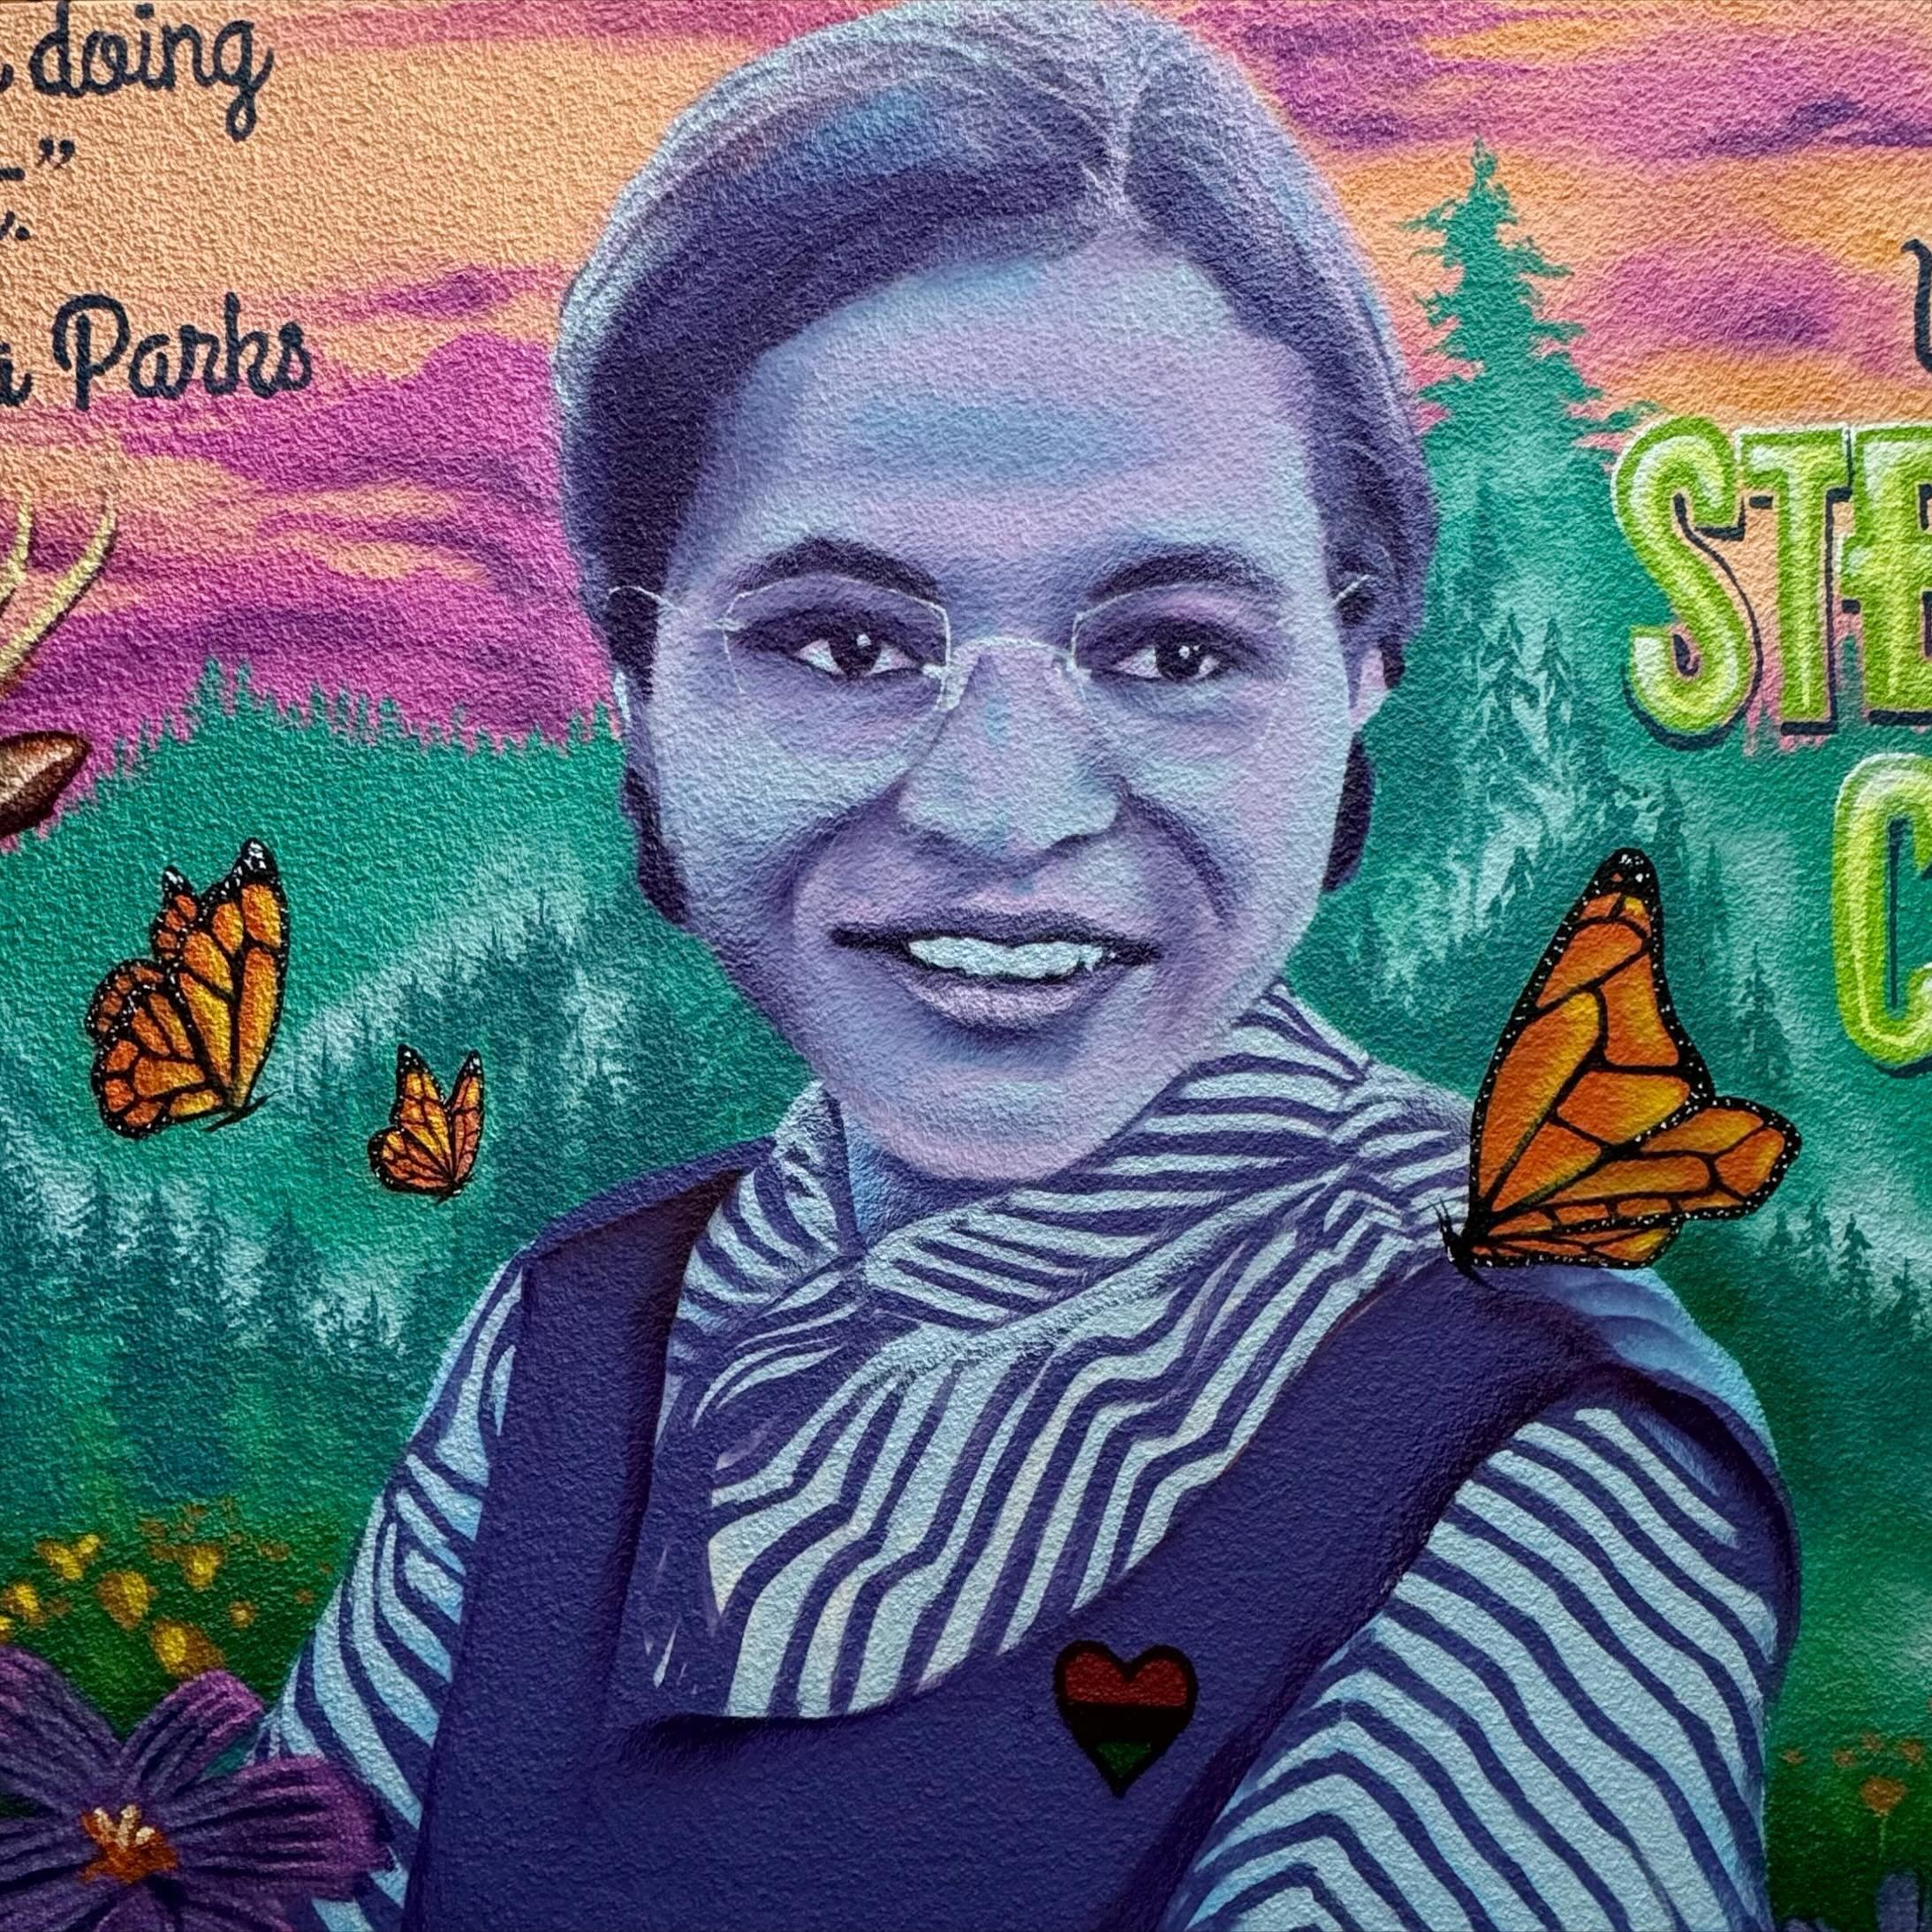 Portrait detail for the @madefreshcrew mural @stevenson.ssc @ucsc of Rosa Parks 

All aerosol, except the glasses 🤓

#muralista #aerosol #rosaparks #ucsc #madefreshcrew #tealops #teamteal #kritrmarks #teal #santacruzmountains #muralists #collaborati